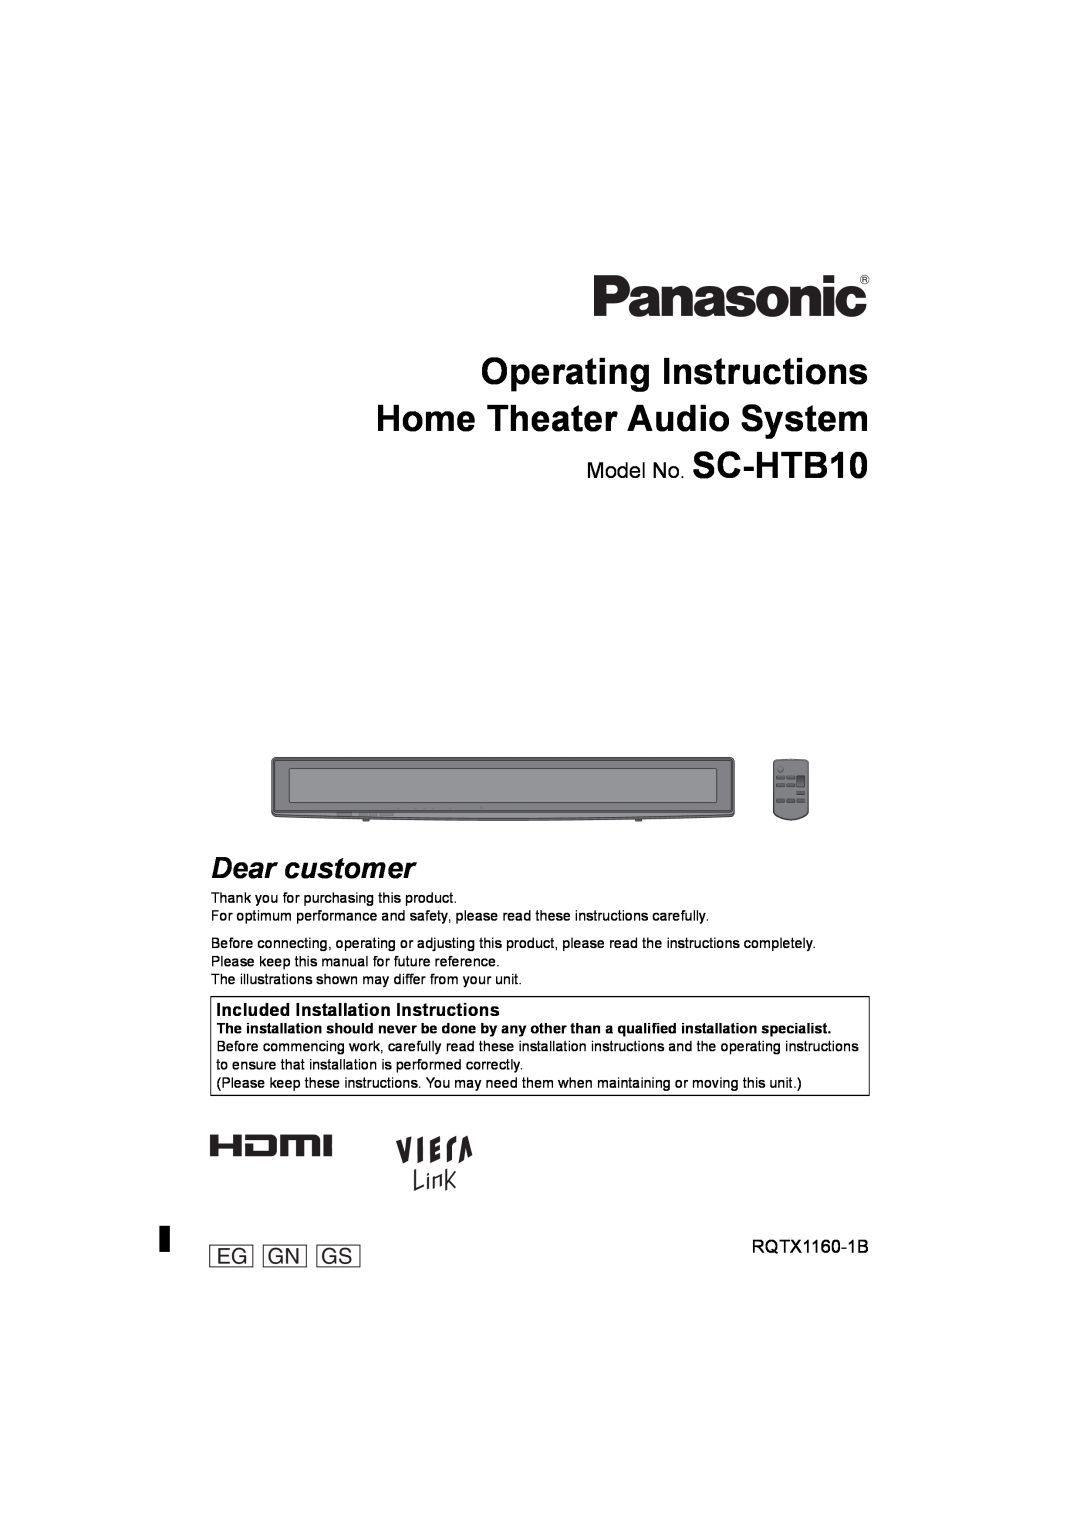 Panasonic operating instructions Model No. SC-HTB10, RQTX1160-1B, Operating Instructions Home Theater Audio System 